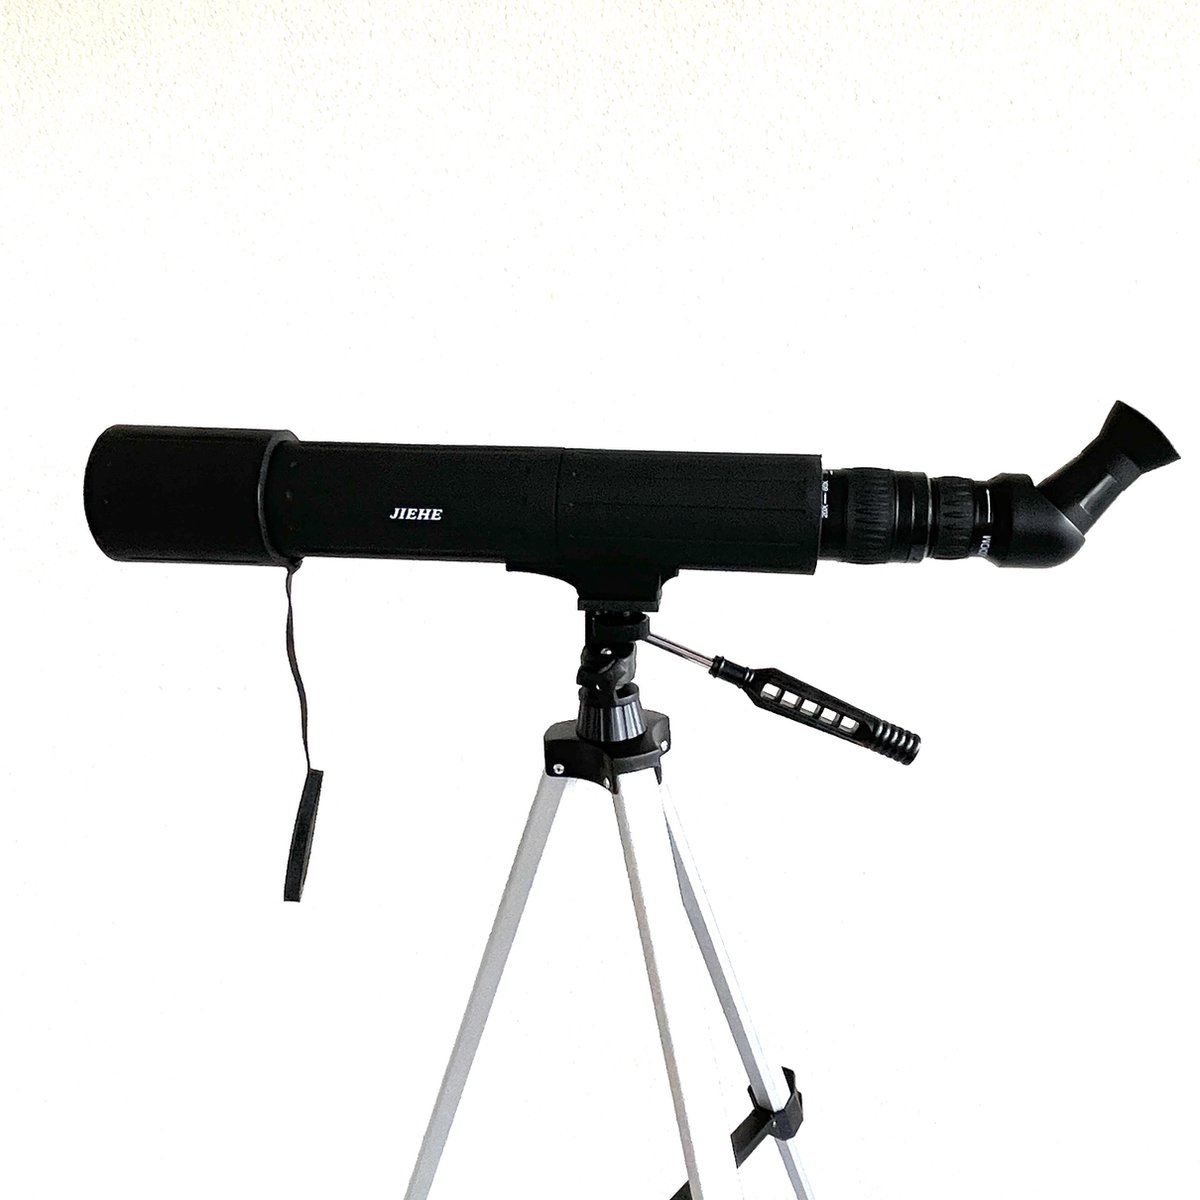 Jiehe 20-60x60mm Spotting scope - Monokijker - Verrekijker - Monoculair verrekijker - Maximale vergroting 60x - Telescoop - Zwart - Incl. statief